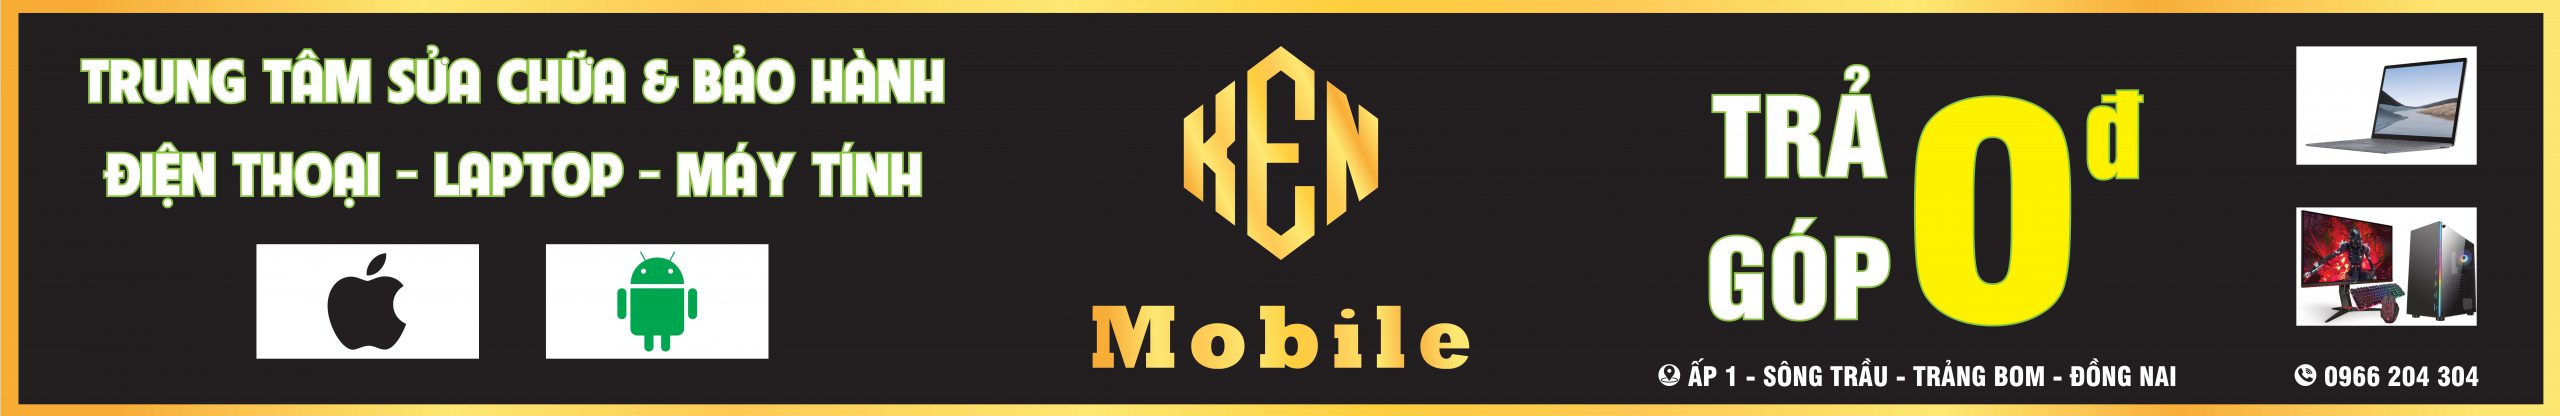 Ken Mobile